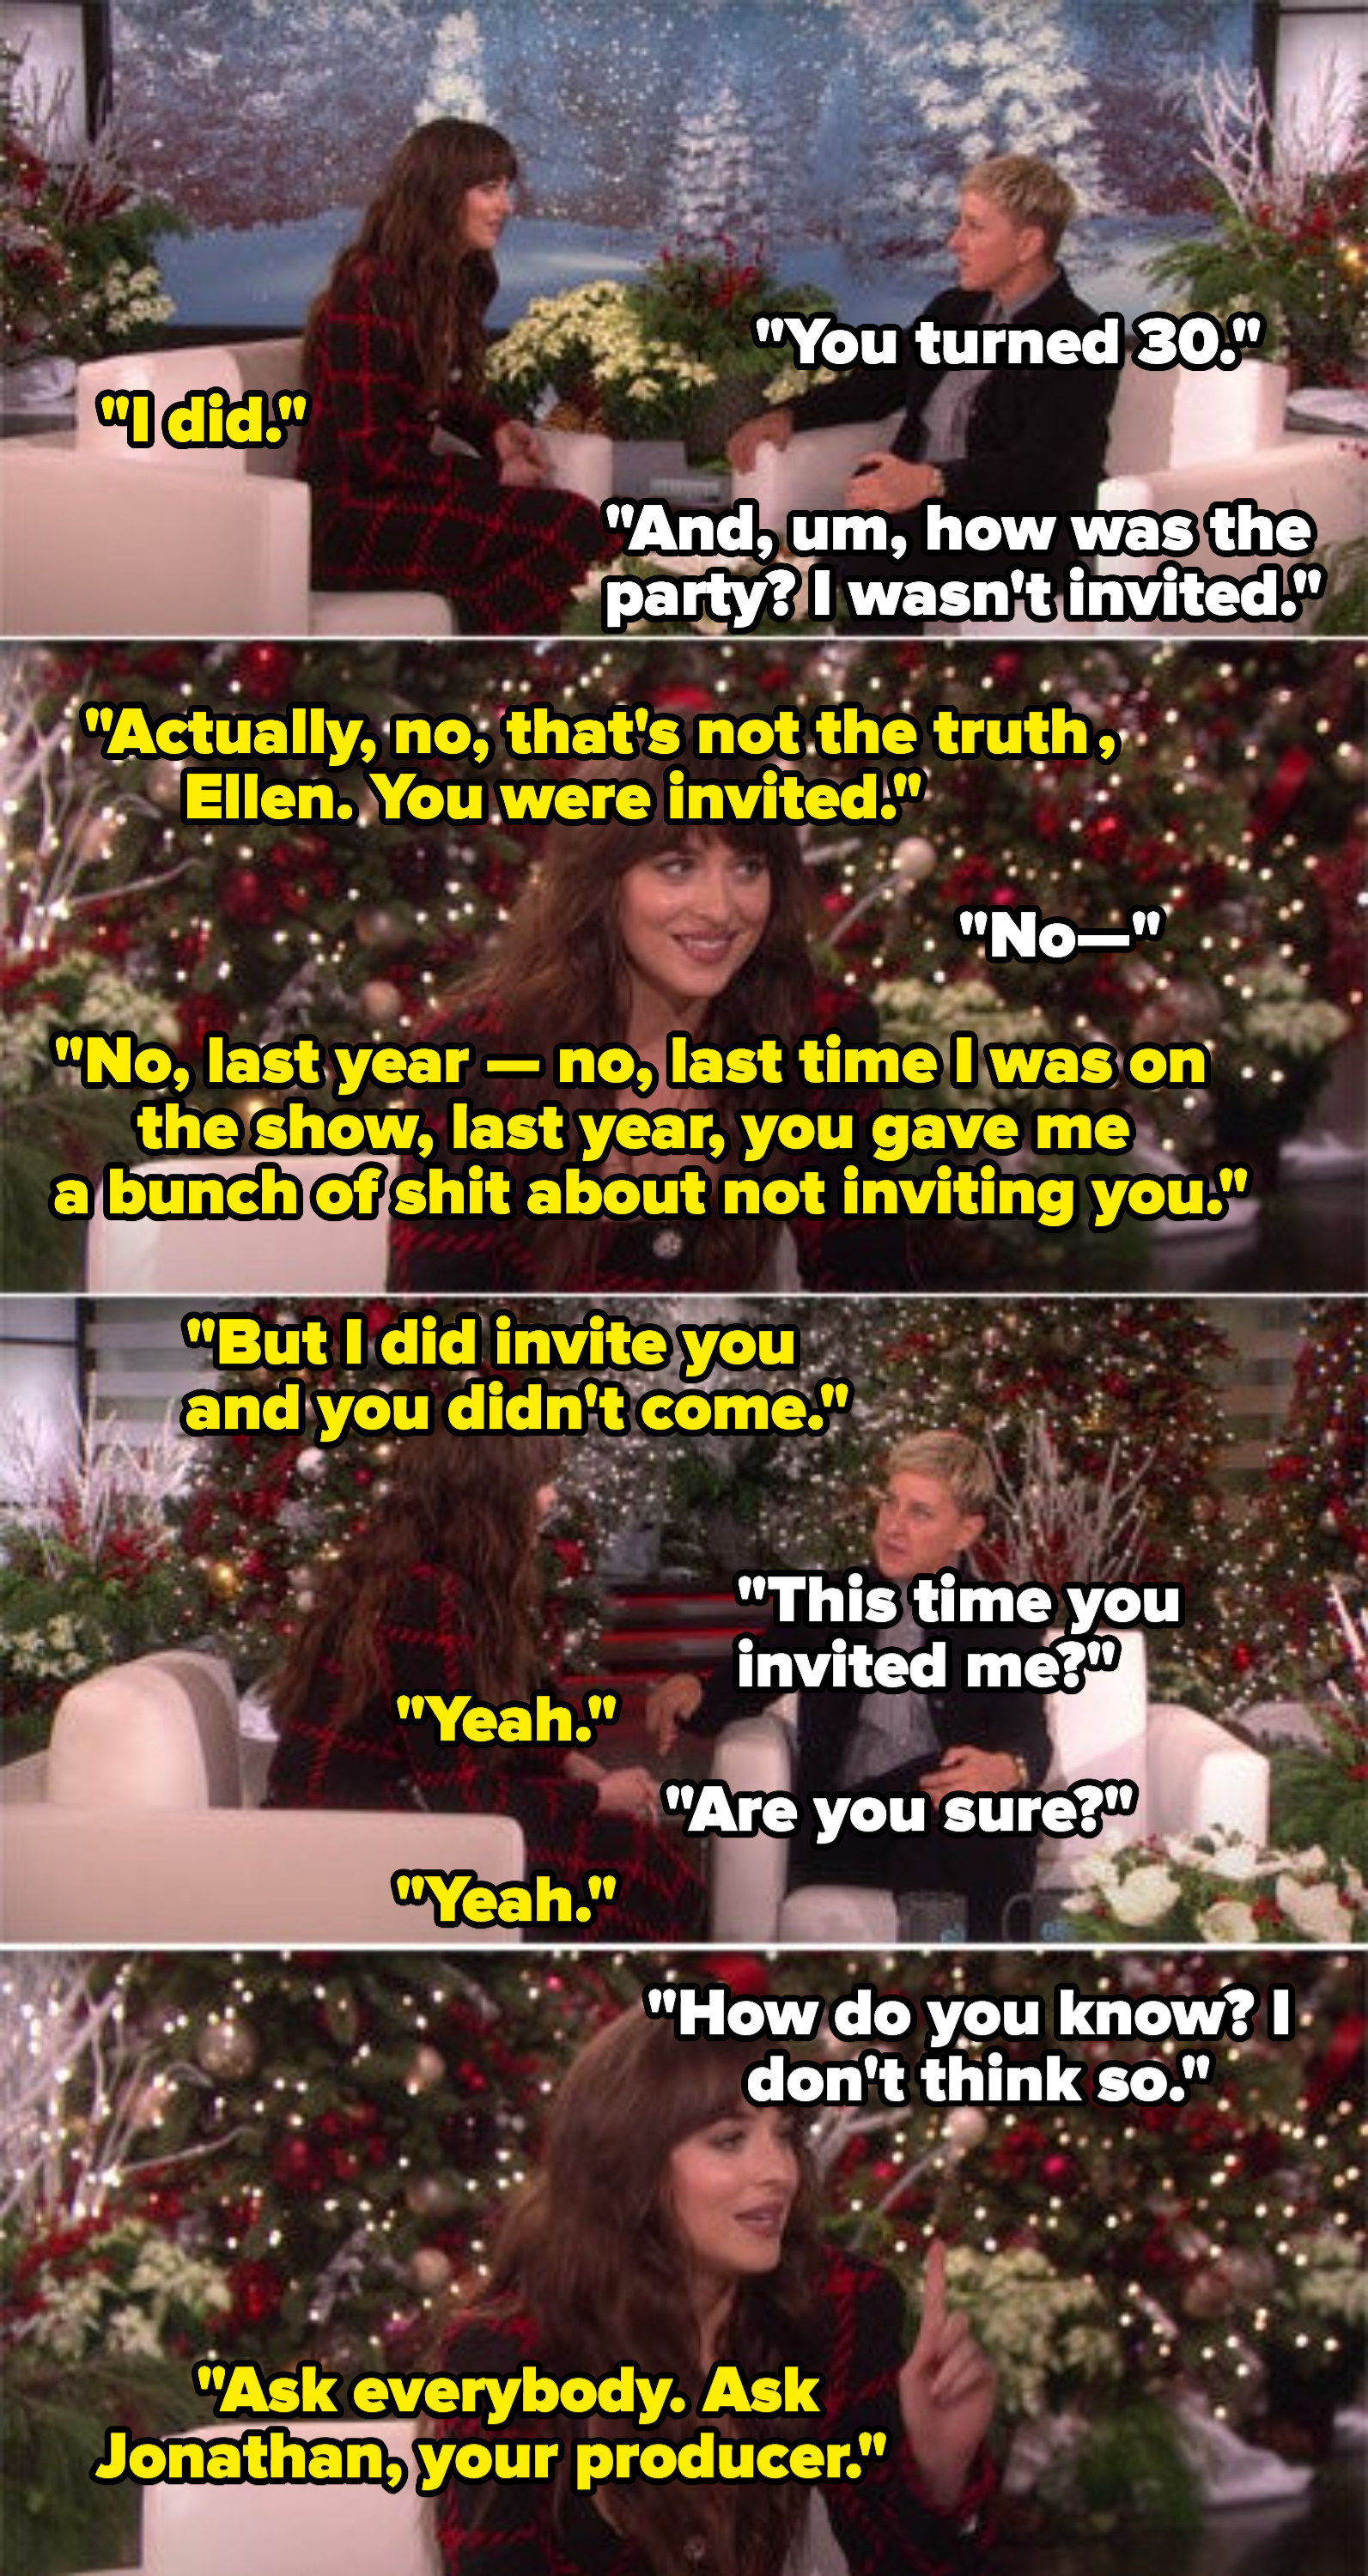 Ellen accusing Dakota of not inviting her to her birthday party